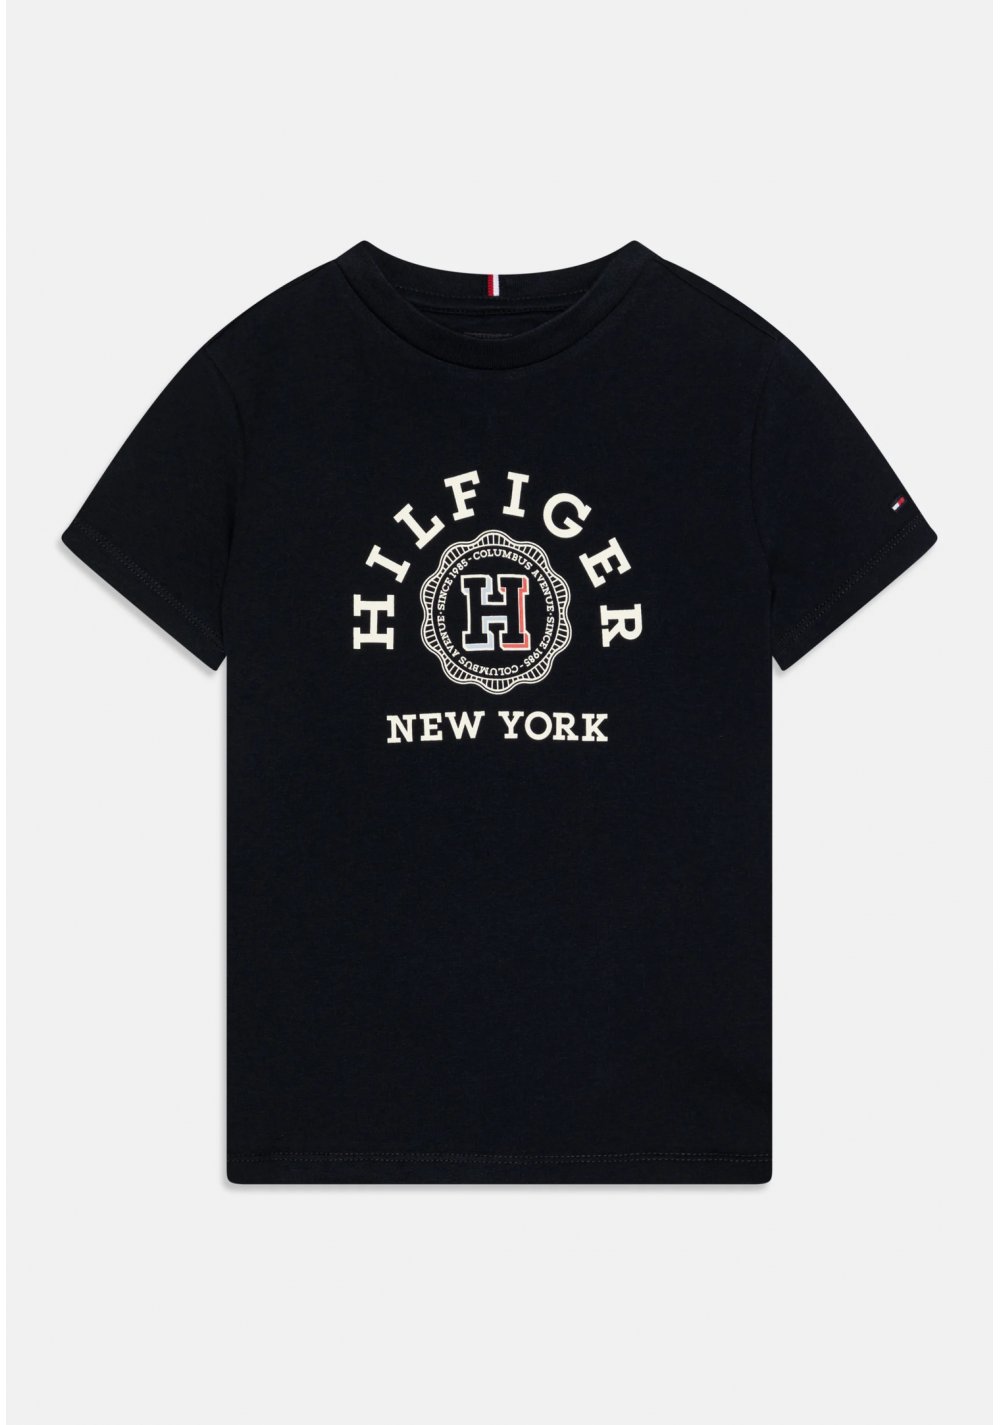 Tommy Hilfiger bambino MONOTYPE - T-shirt blu con stampa logo, girocollo